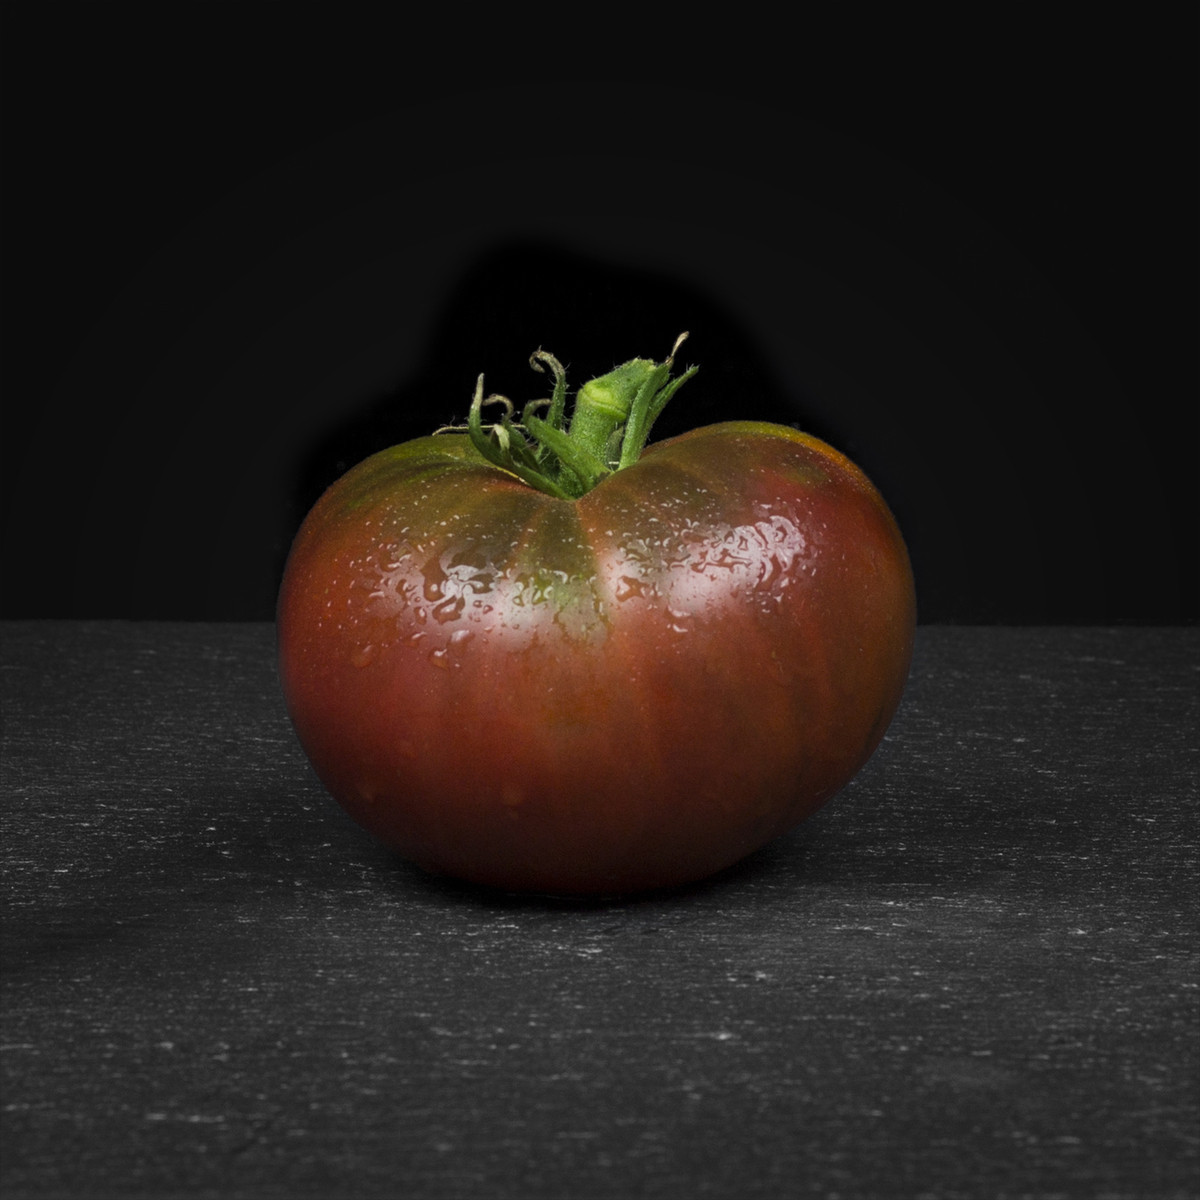 Rajče Černý muž - Lycopersicon esculentum - semena rajčete - 6 ks